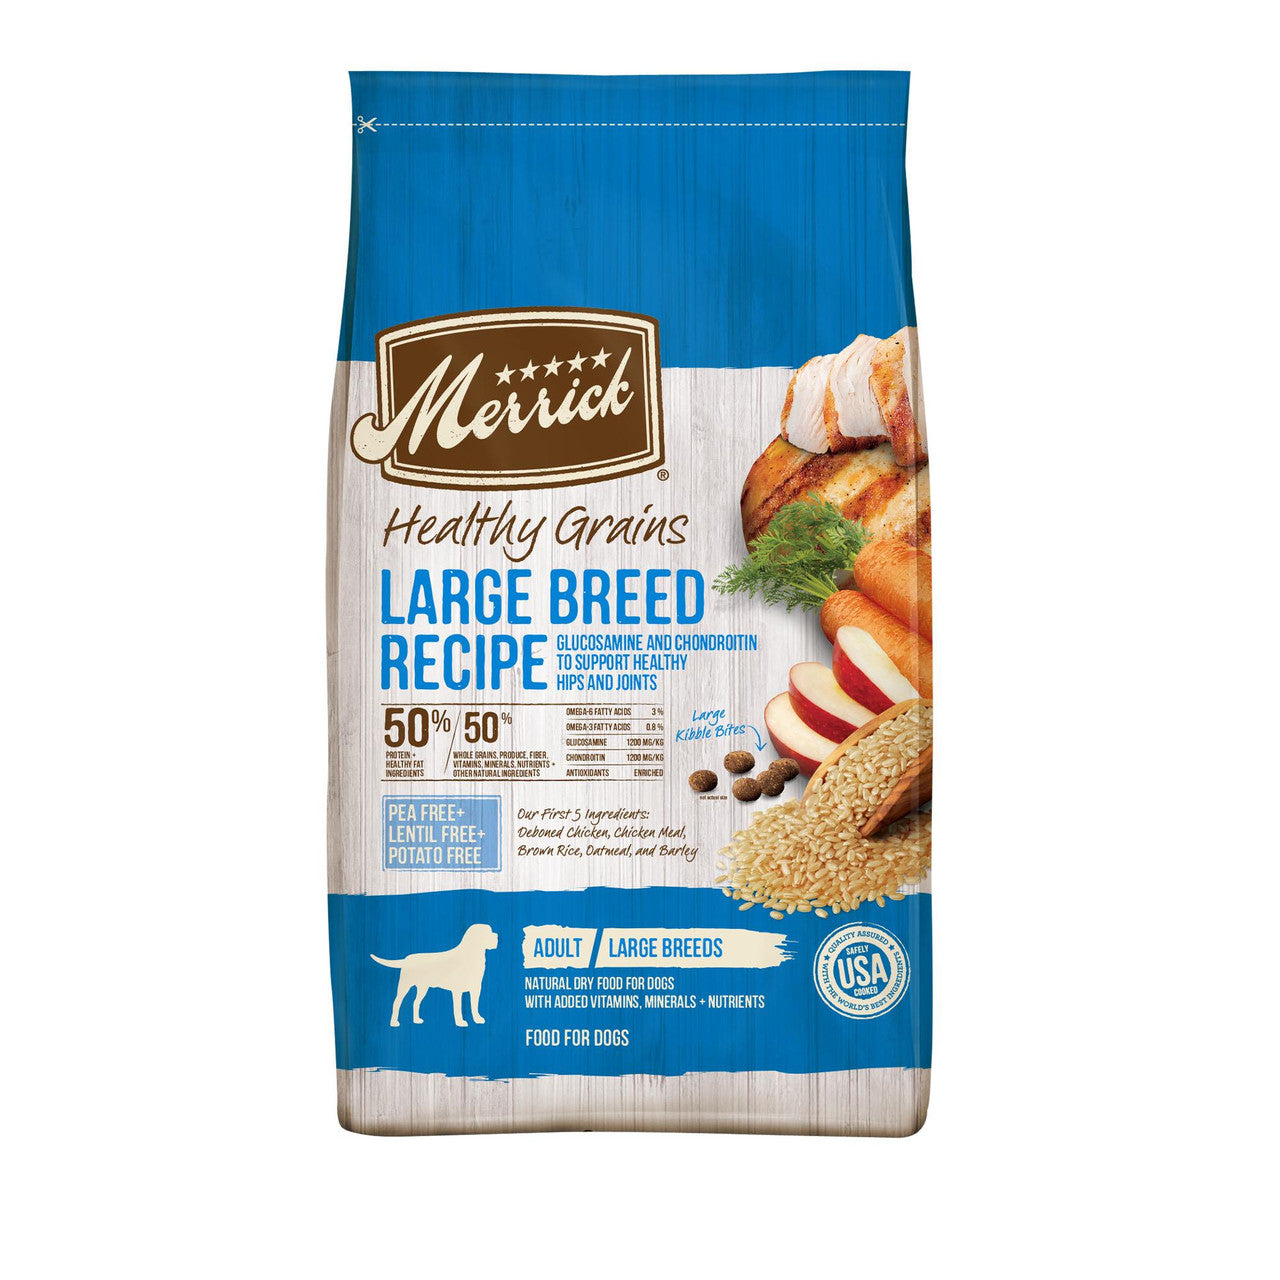 Merrick Healthy Grains Large Breed Recipe Dog 30 lb 022808320142